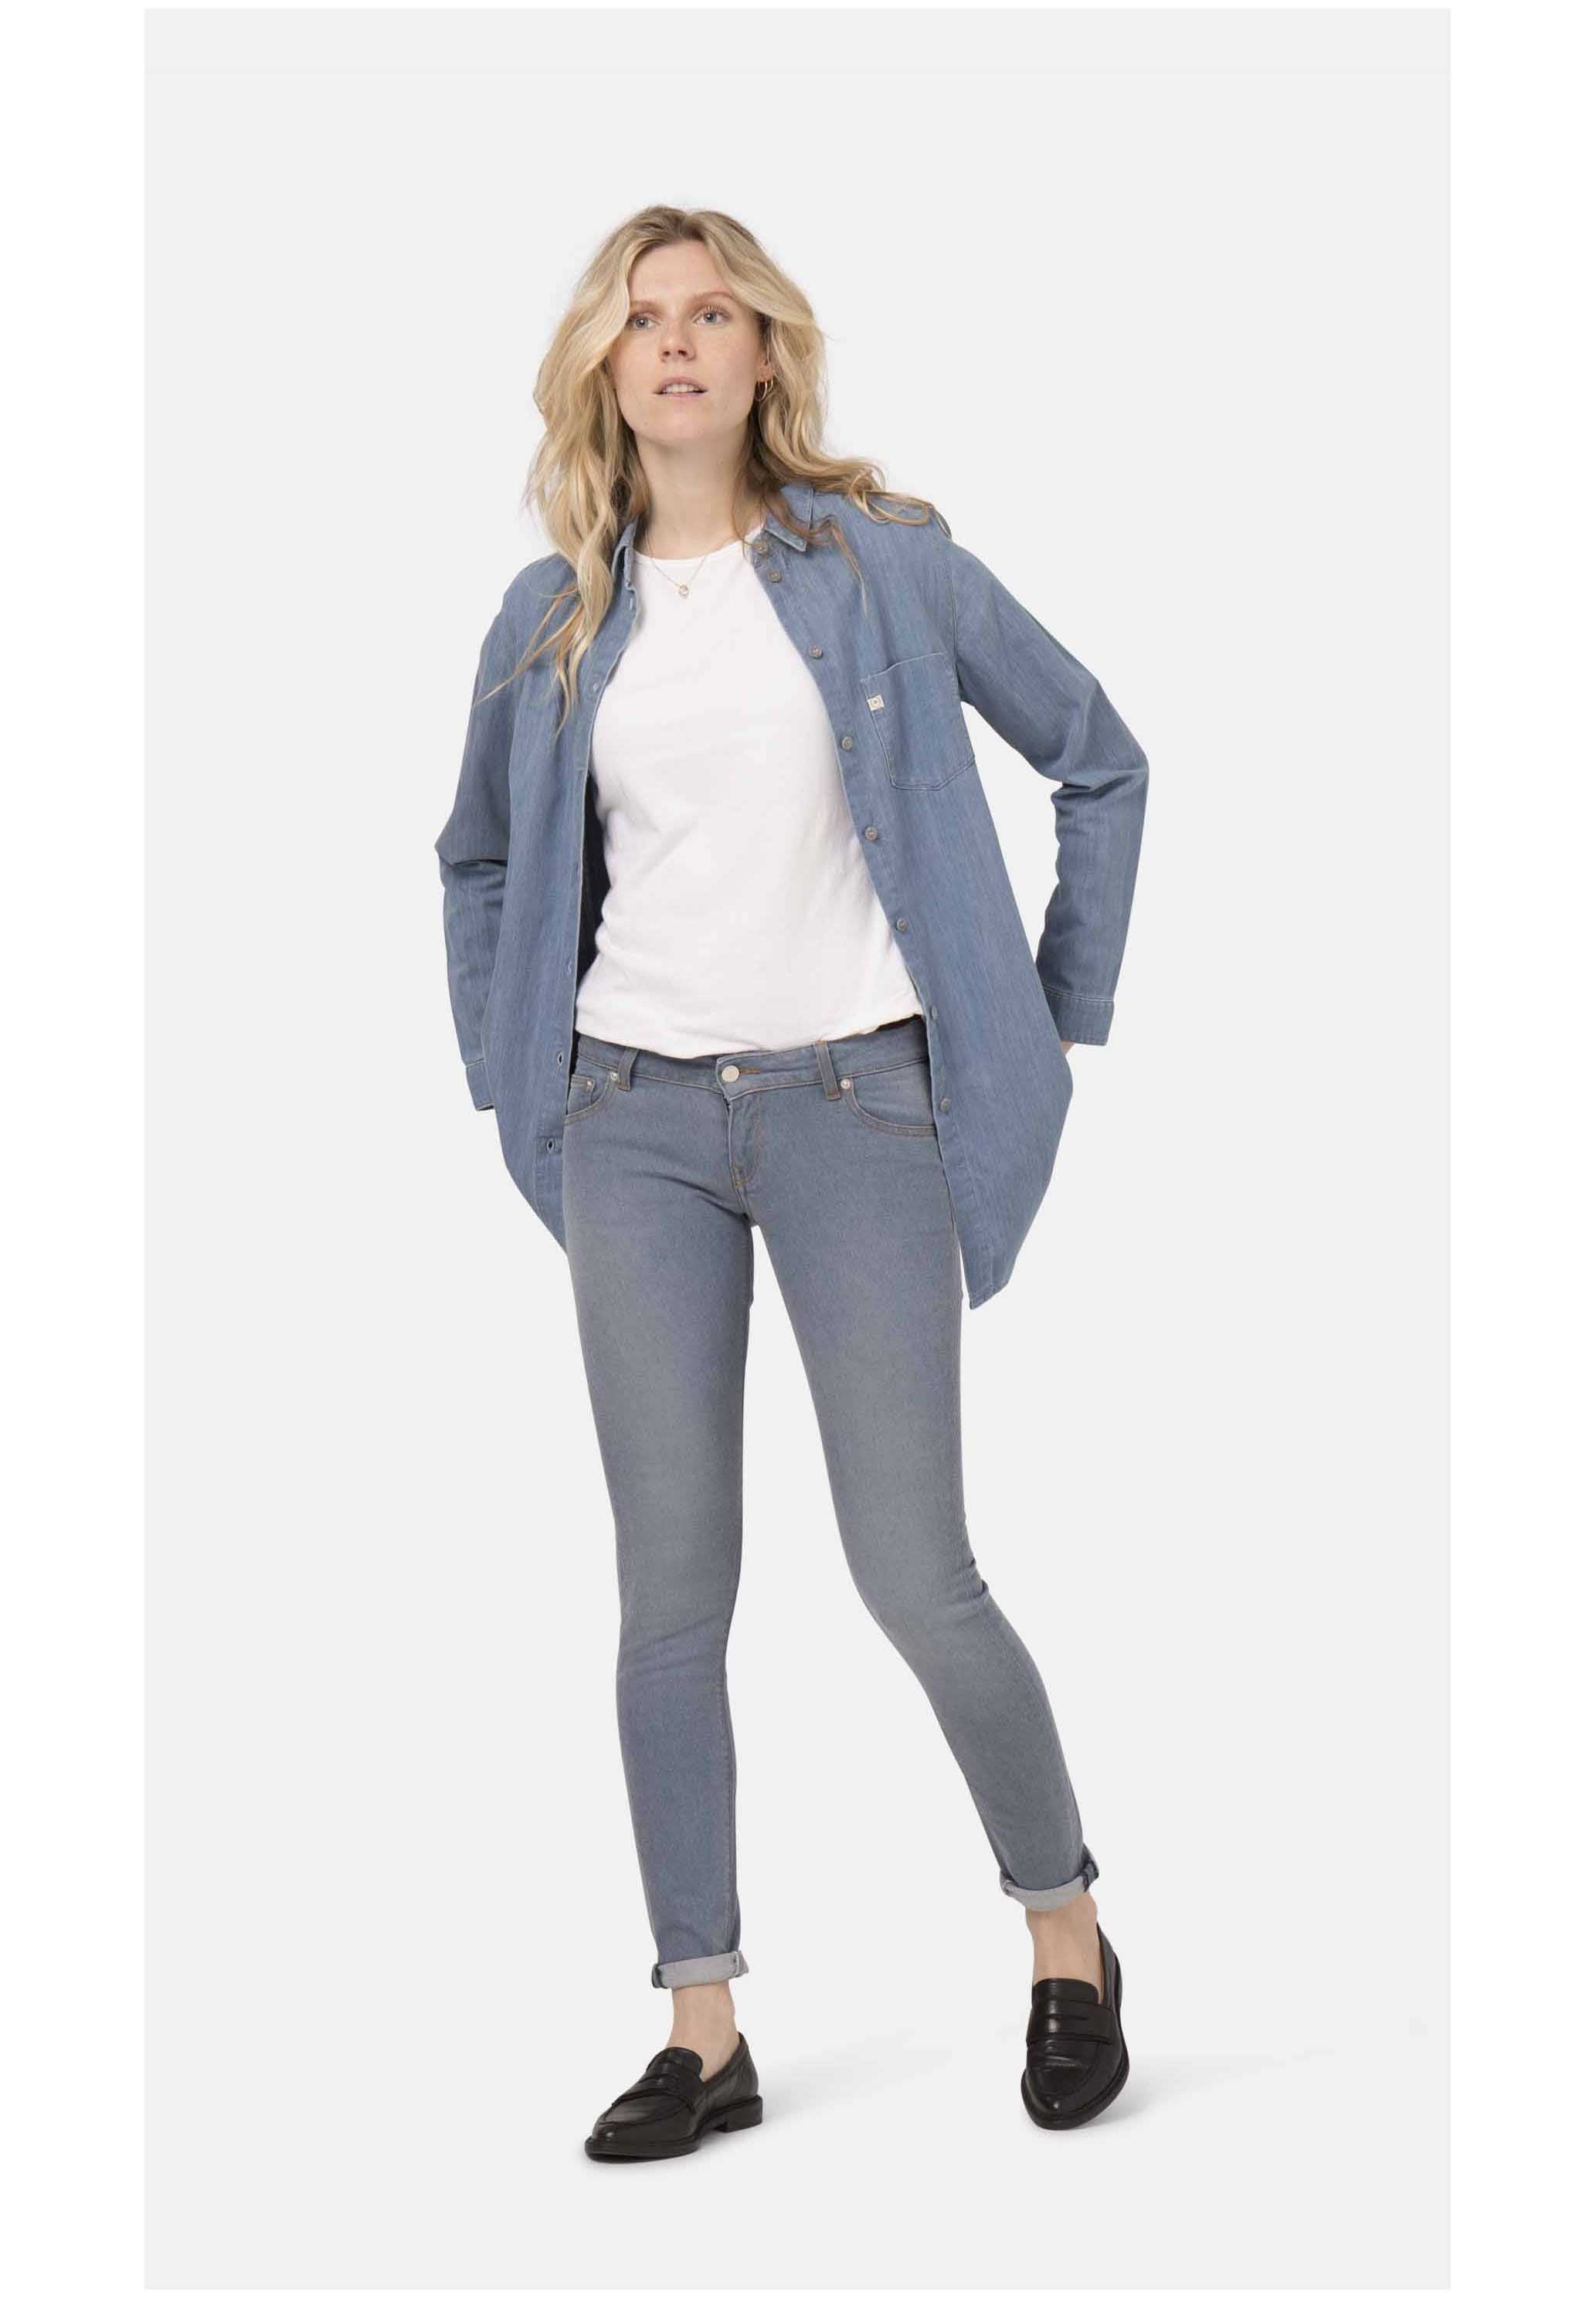 LILLY Womens skinny blue jeans by MUD, W33 / L30